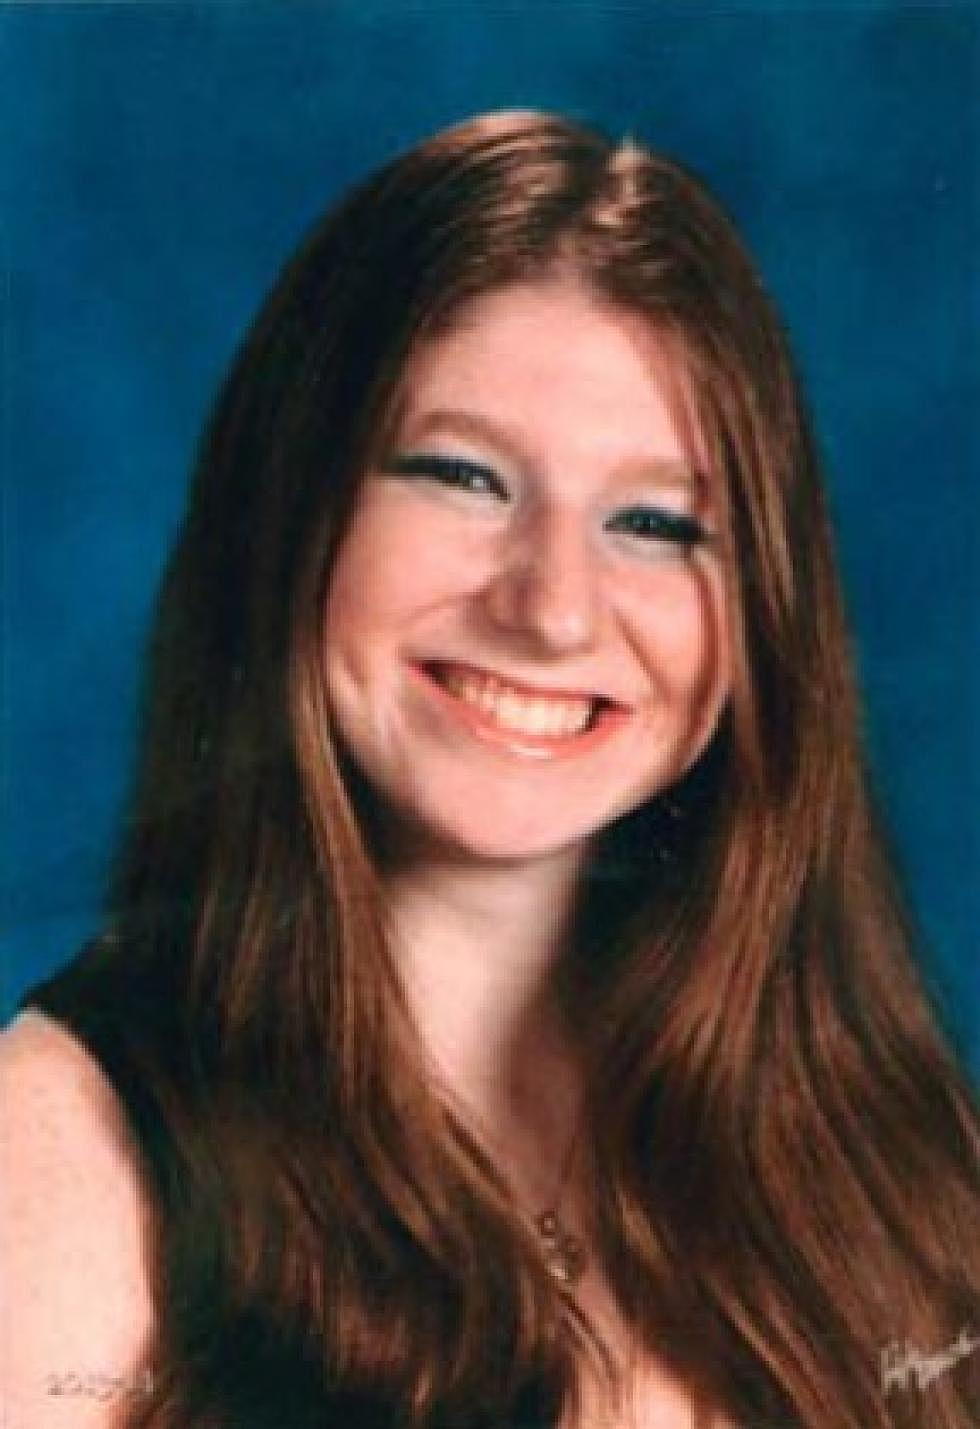 Missing &#8211; 16-Year-Old East Greenbush Girl